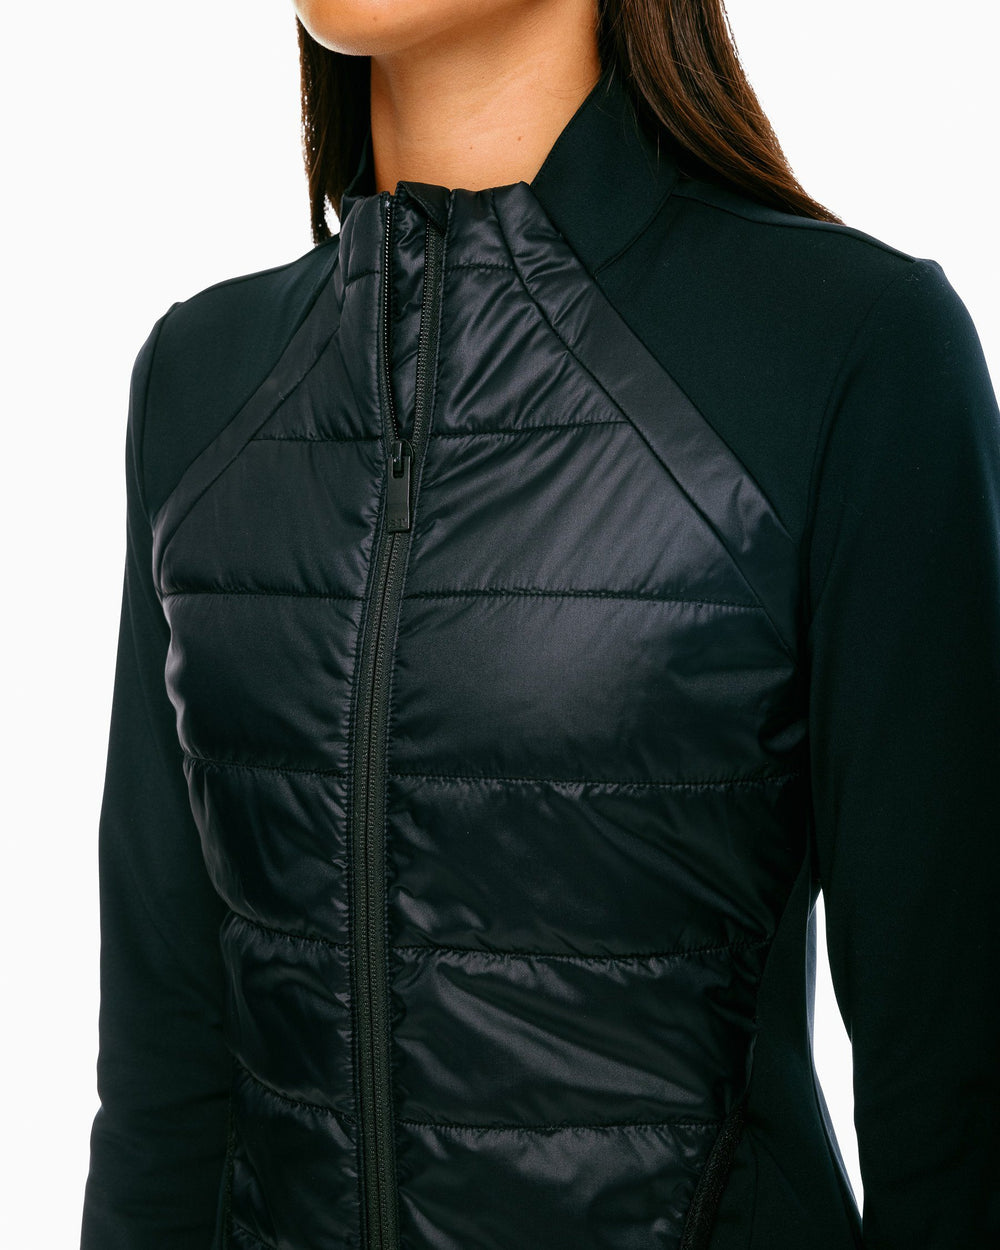 The detail of the Women's Josette Mixed Media Full Zip Athletic Jacket - Black